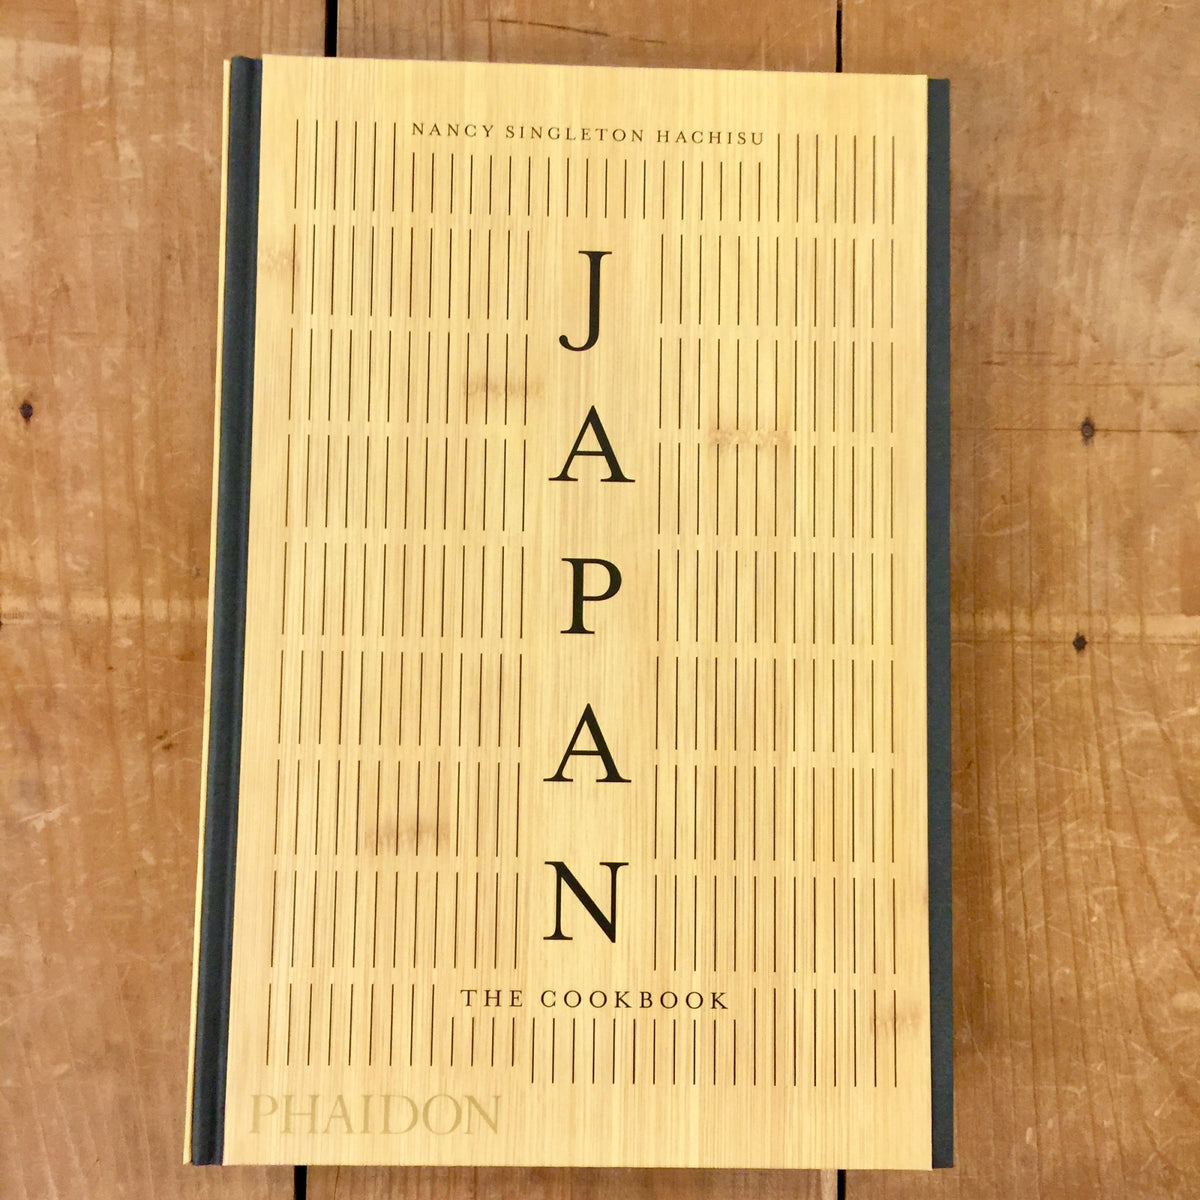 Japan: The Cookbook -  Nancy Singleton Hachisu